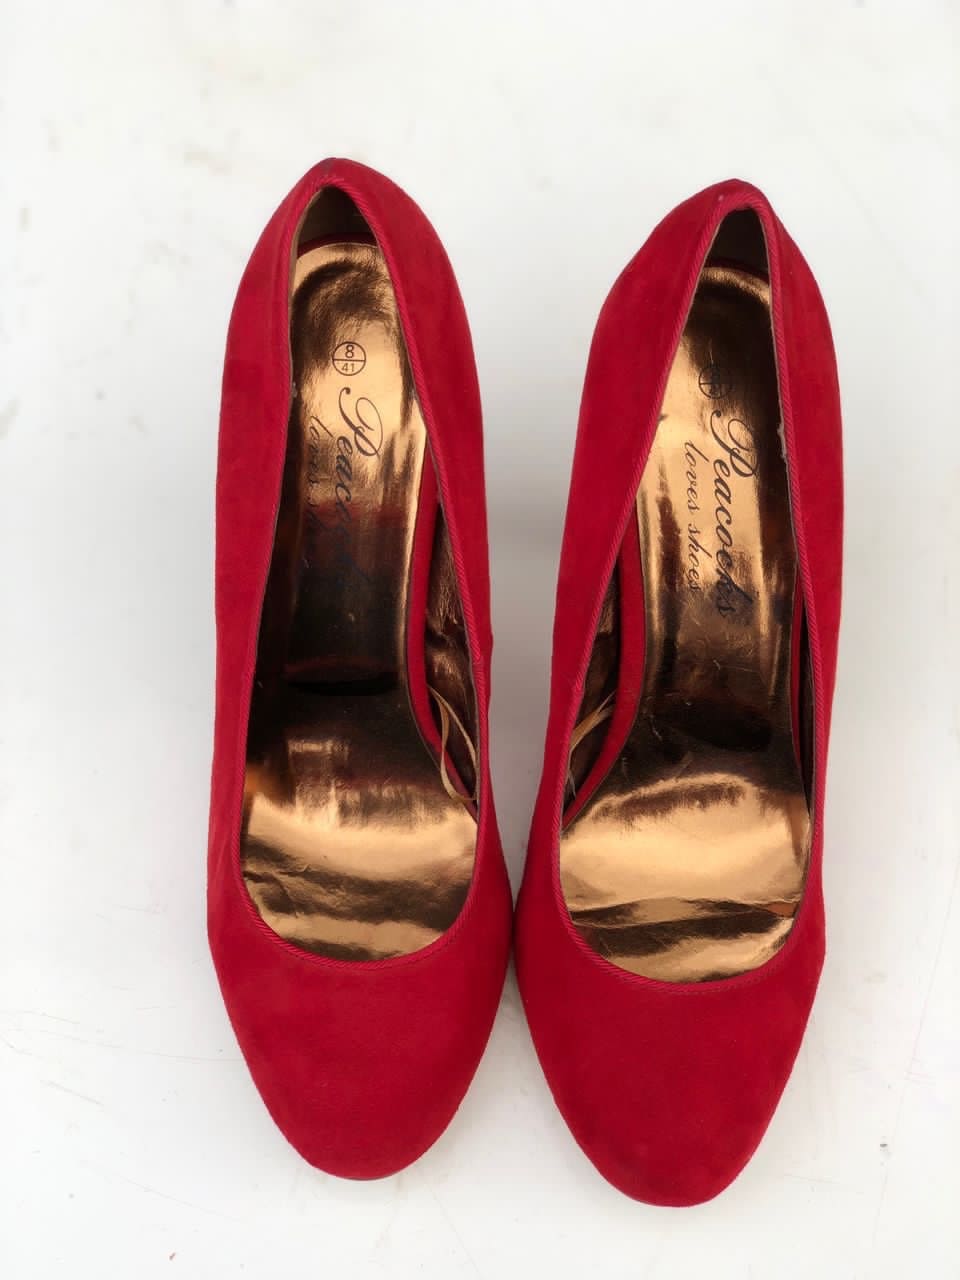 NeasFashion product - Beautiful red heels for women